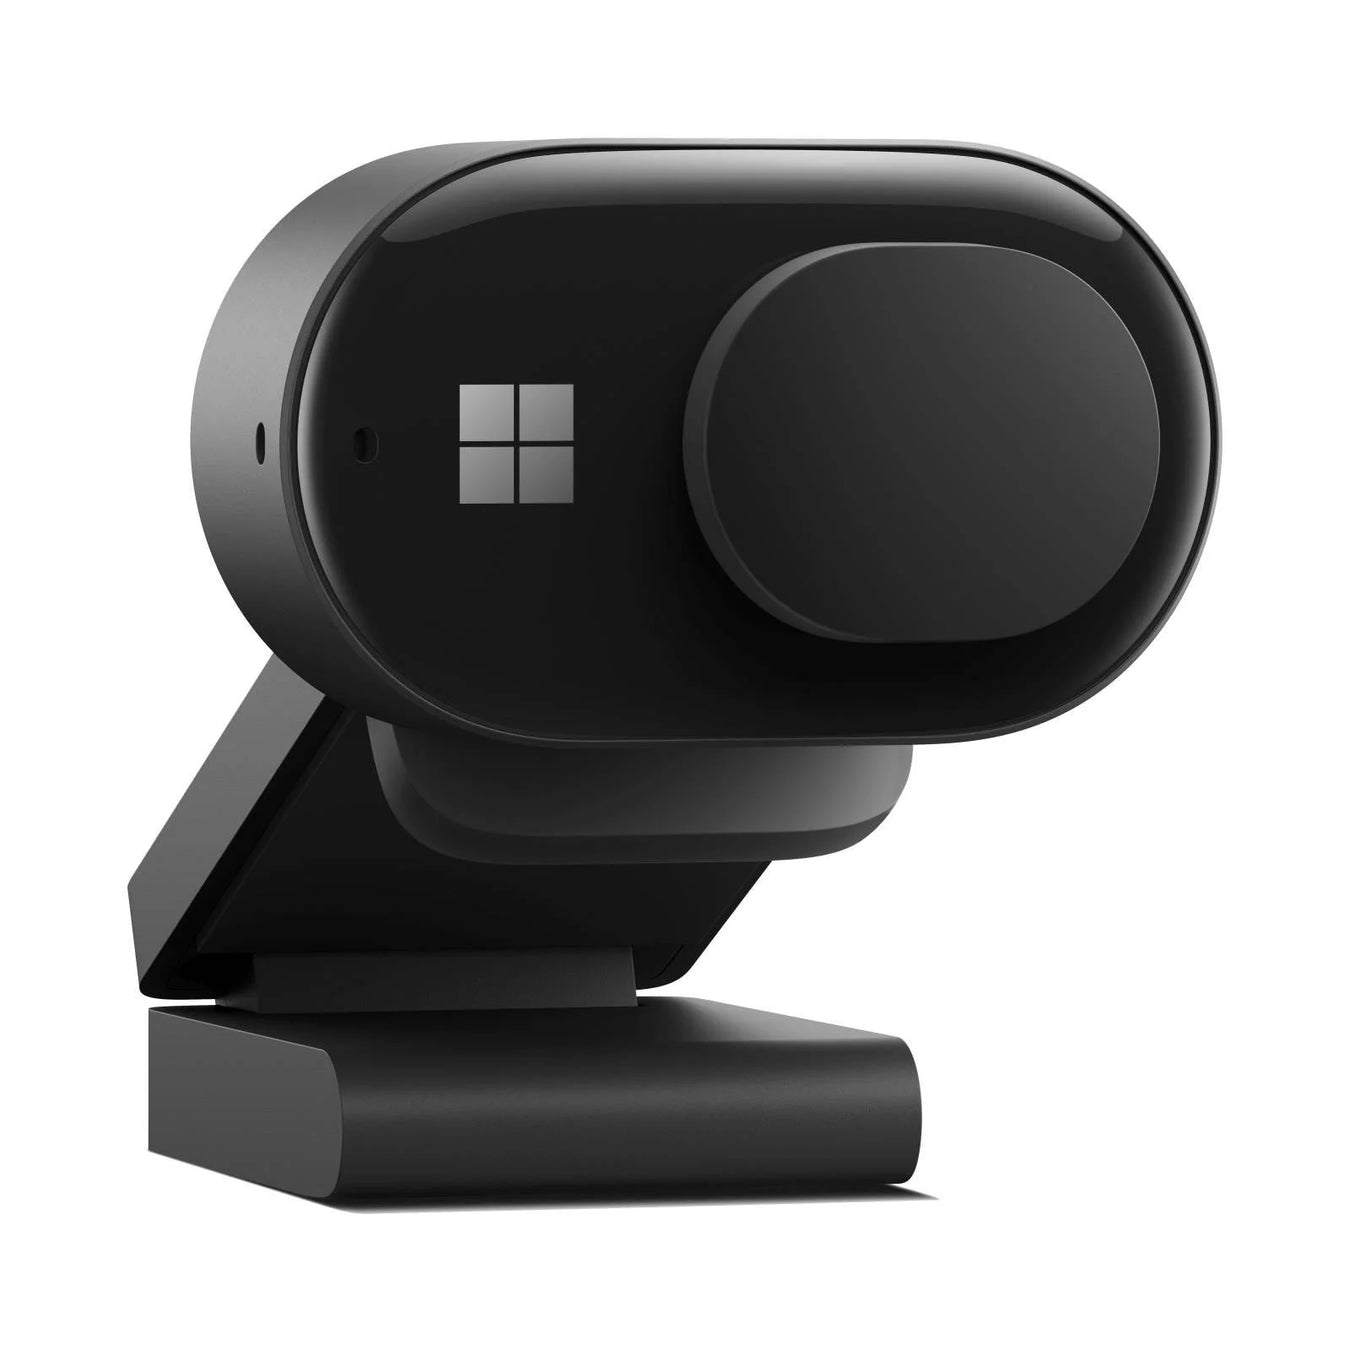 Microsoft's Web-Cameras